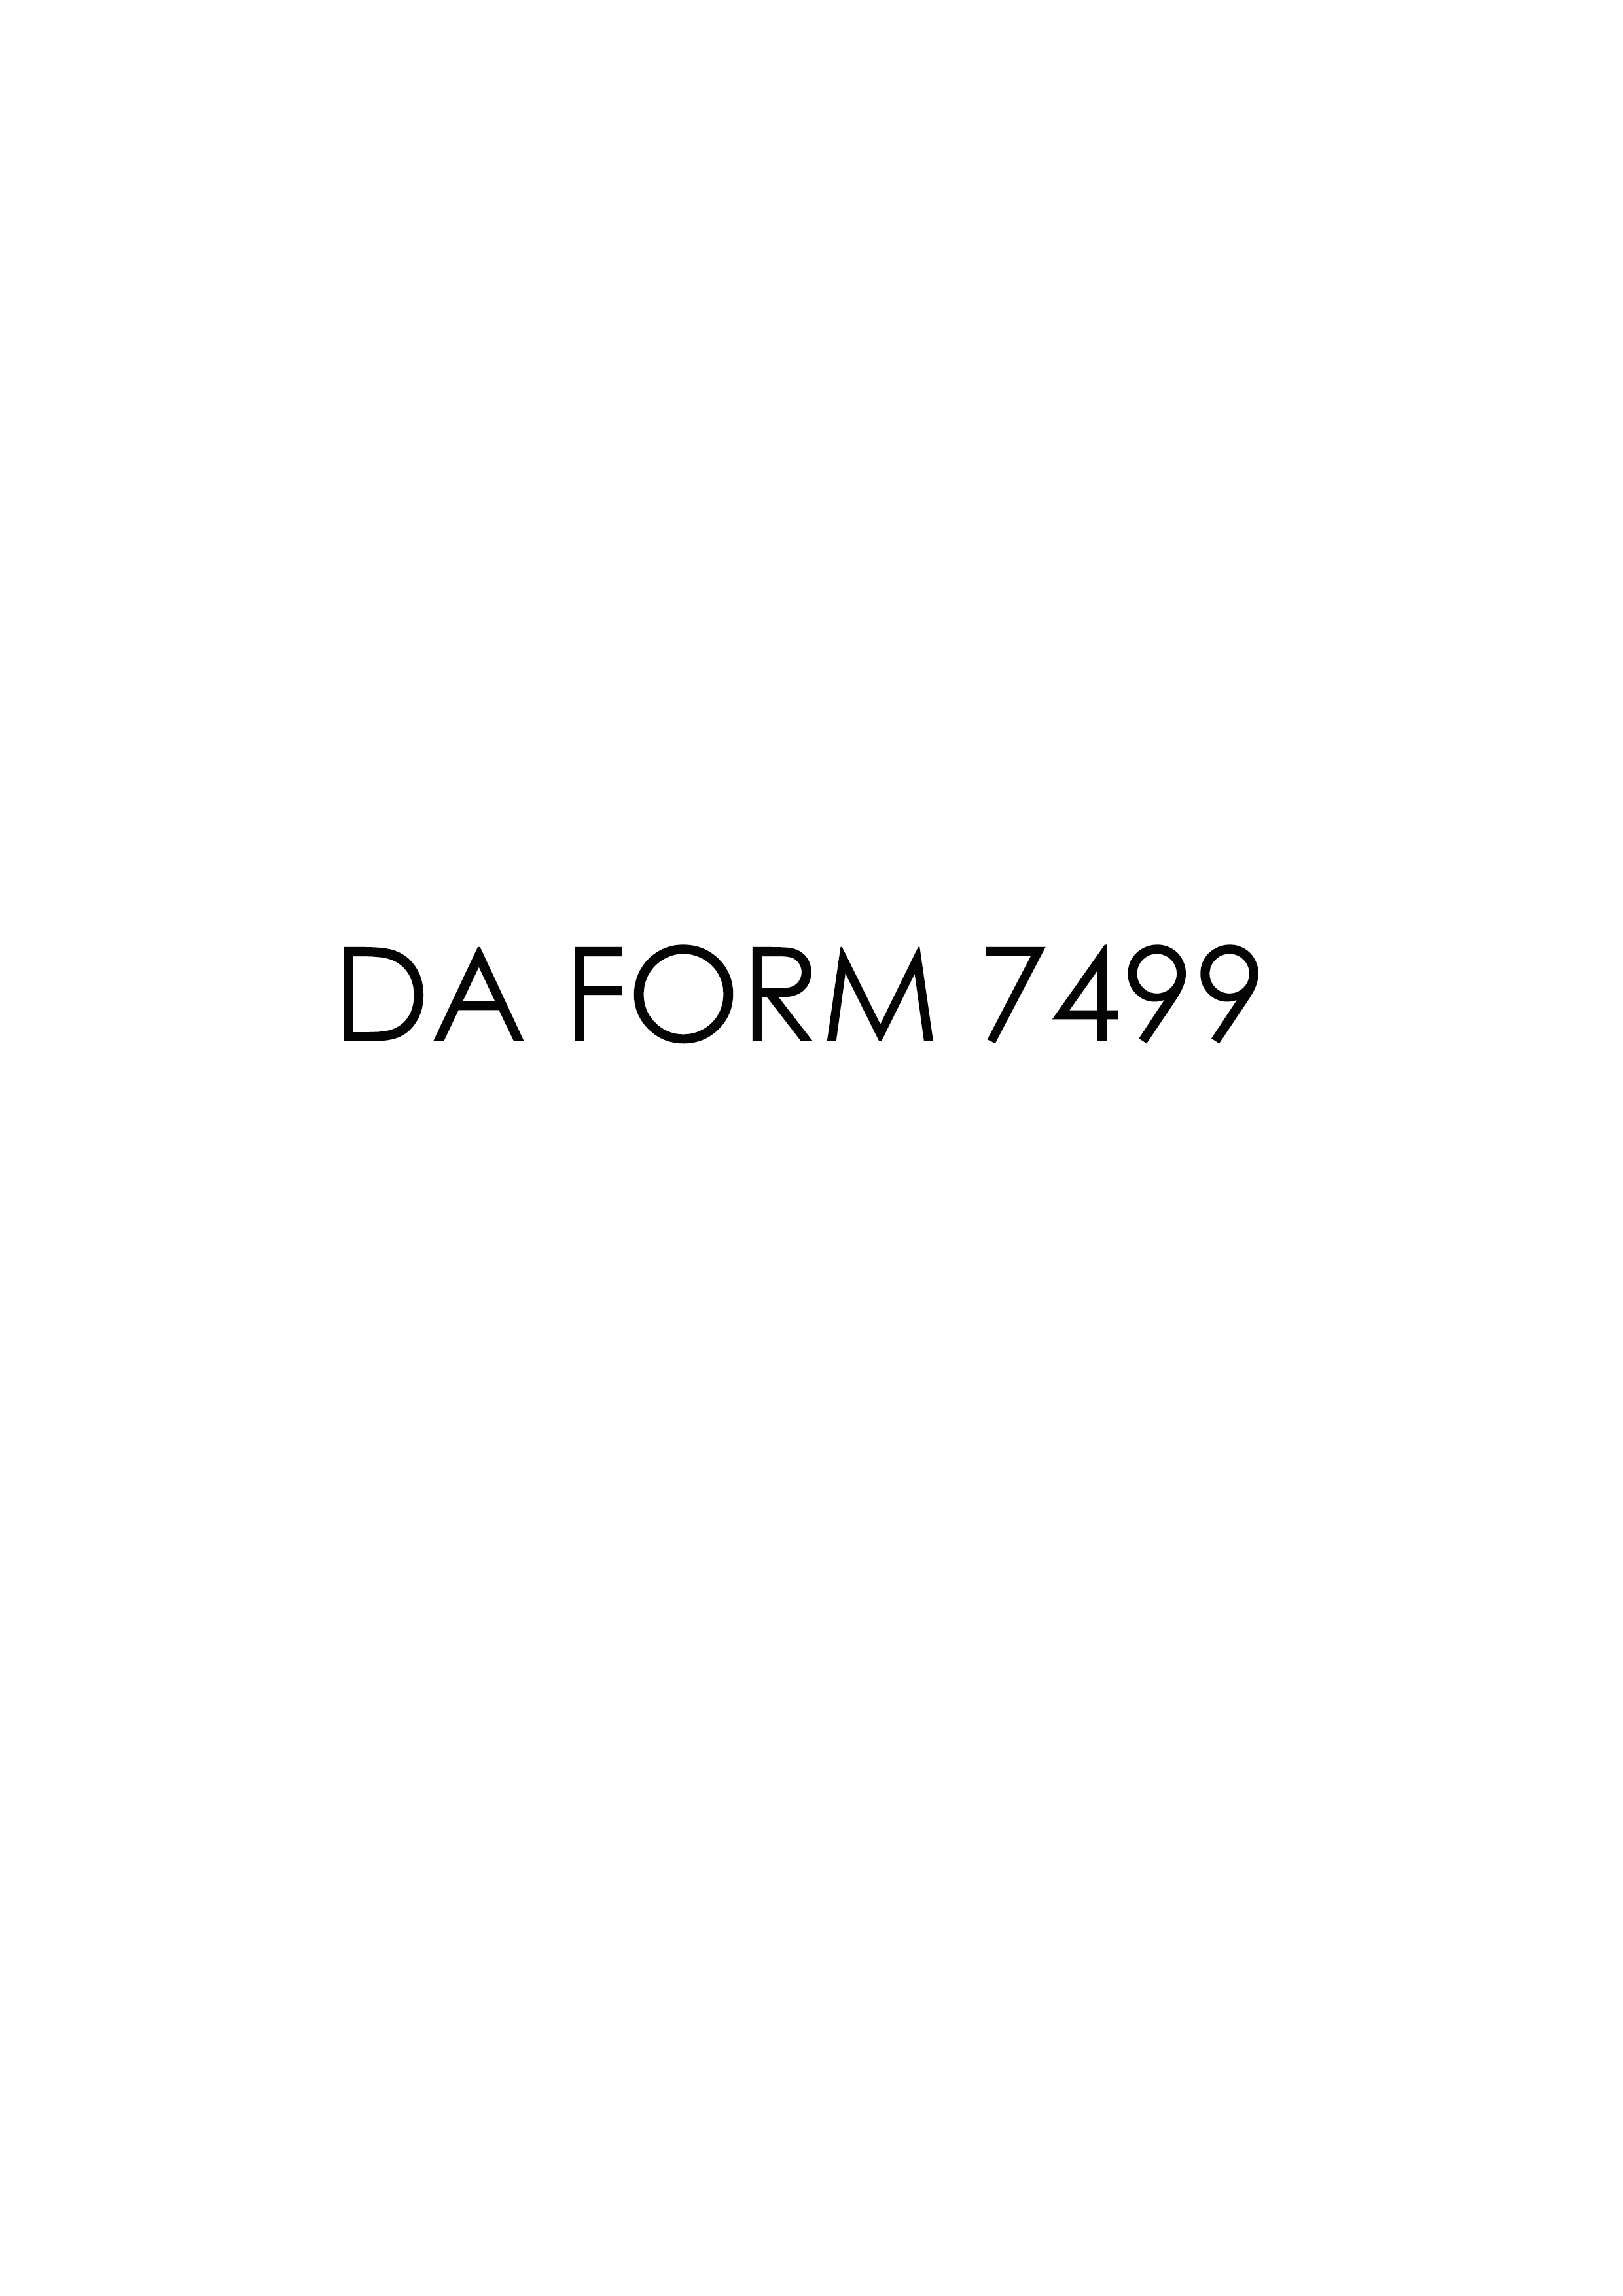 da Form 7499 fillable